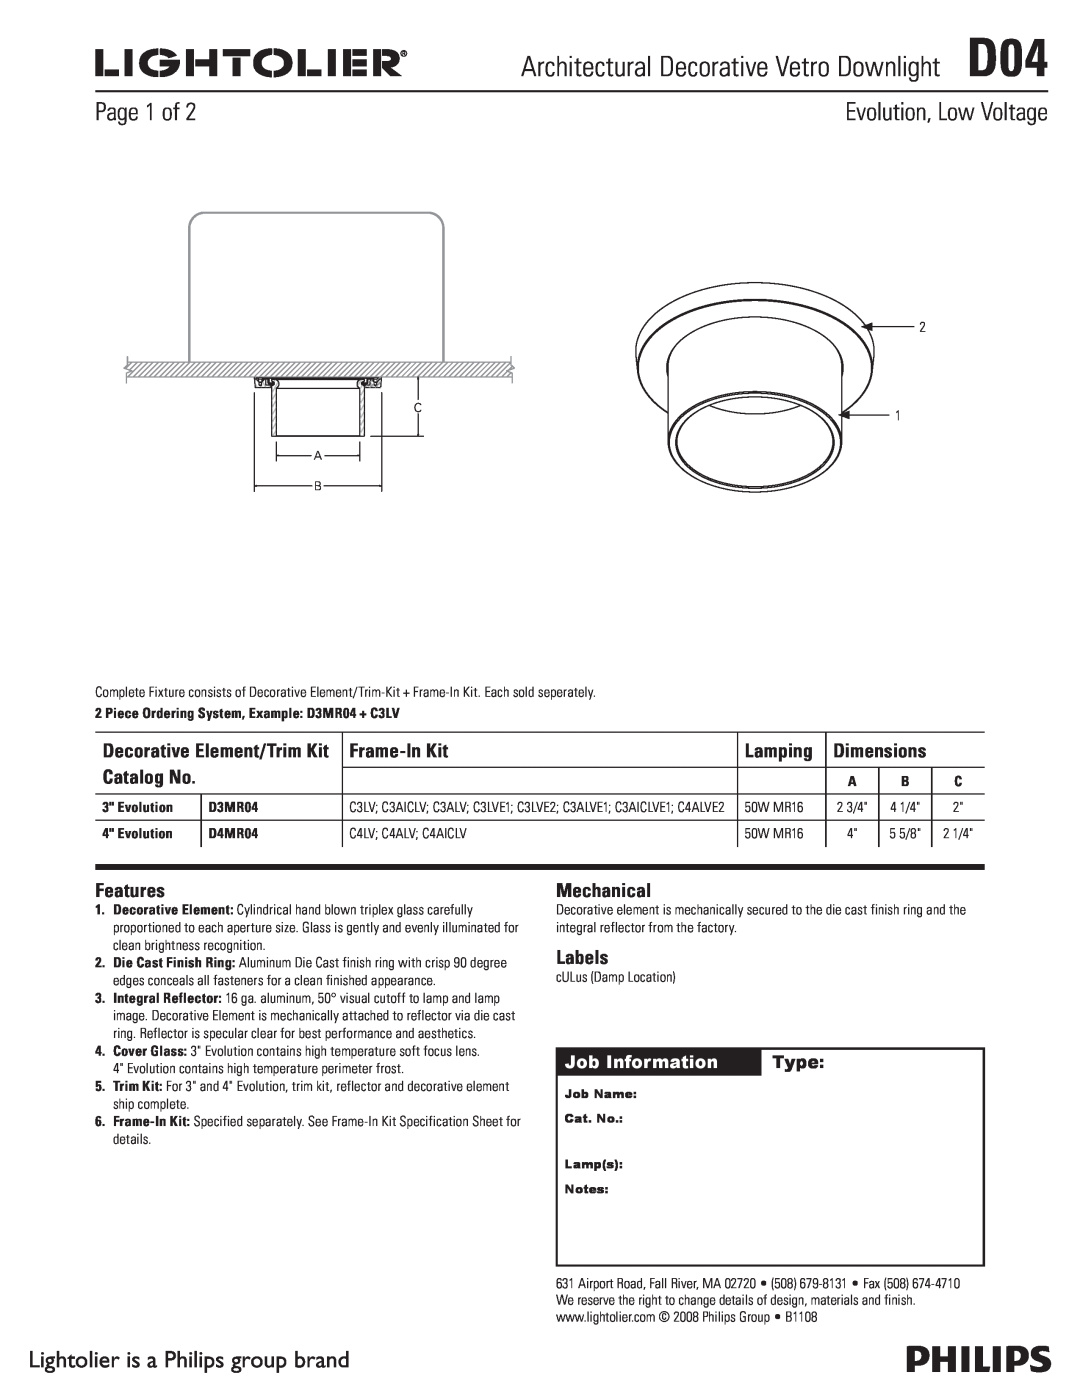 Lightolier dimensions Architectural Decorative Vetro DownlightD04, Evolution, Low Voltage, Page 1 of, Job Information 